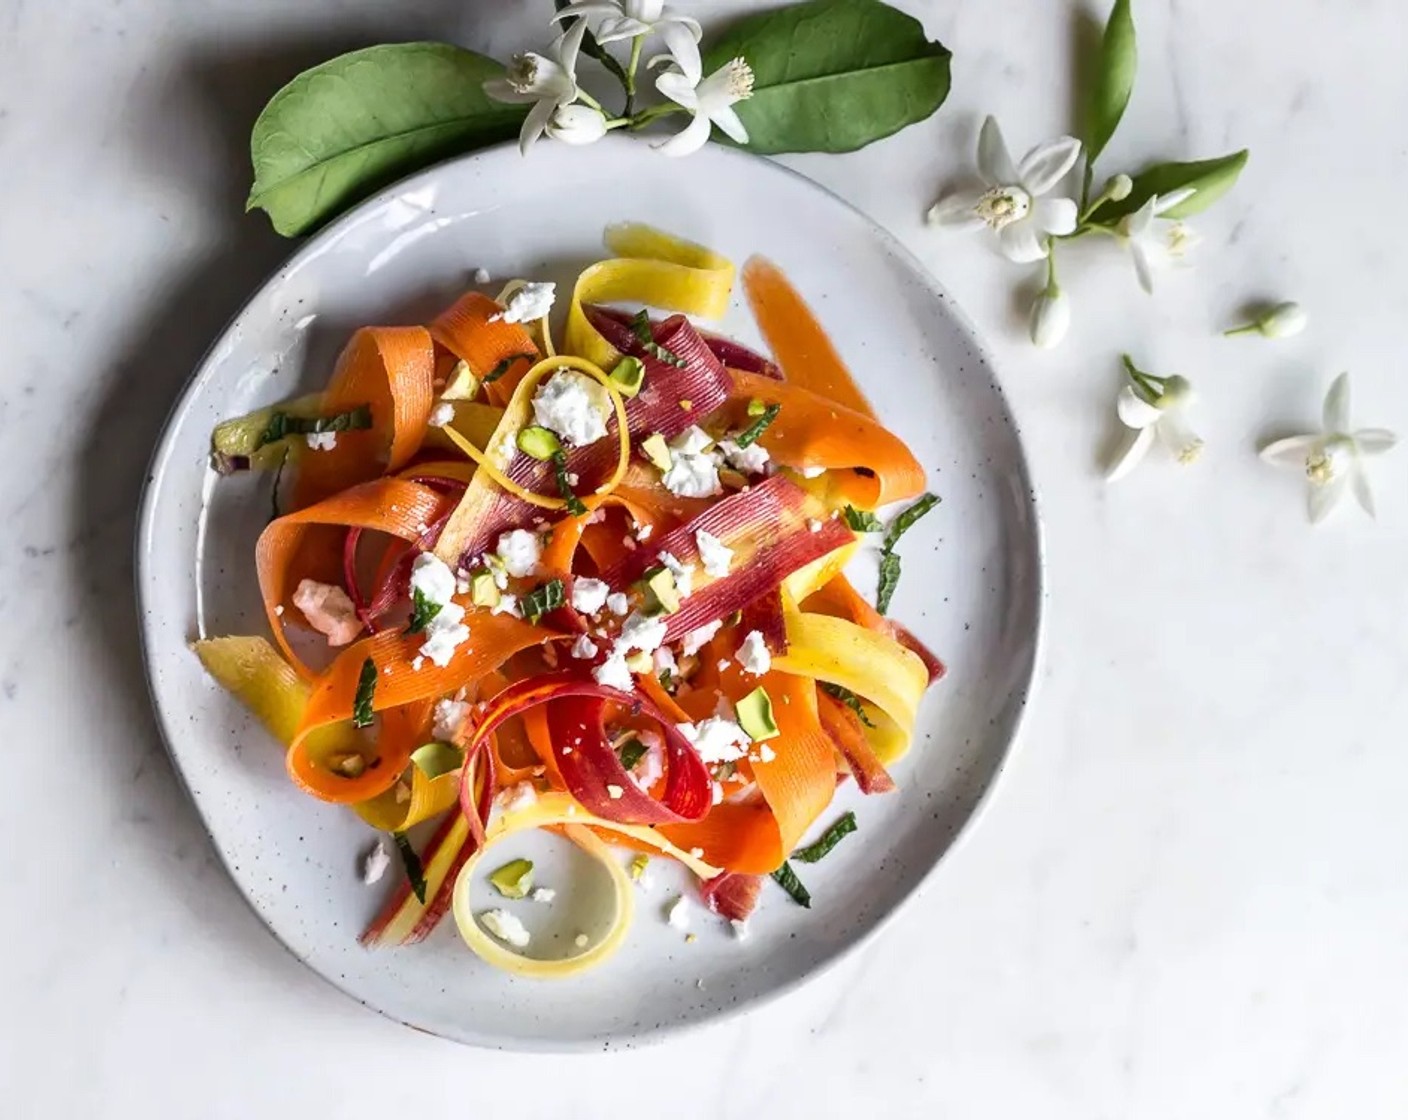 Carrot, Feta and Pistachio Salad with Orange Blossom Toss